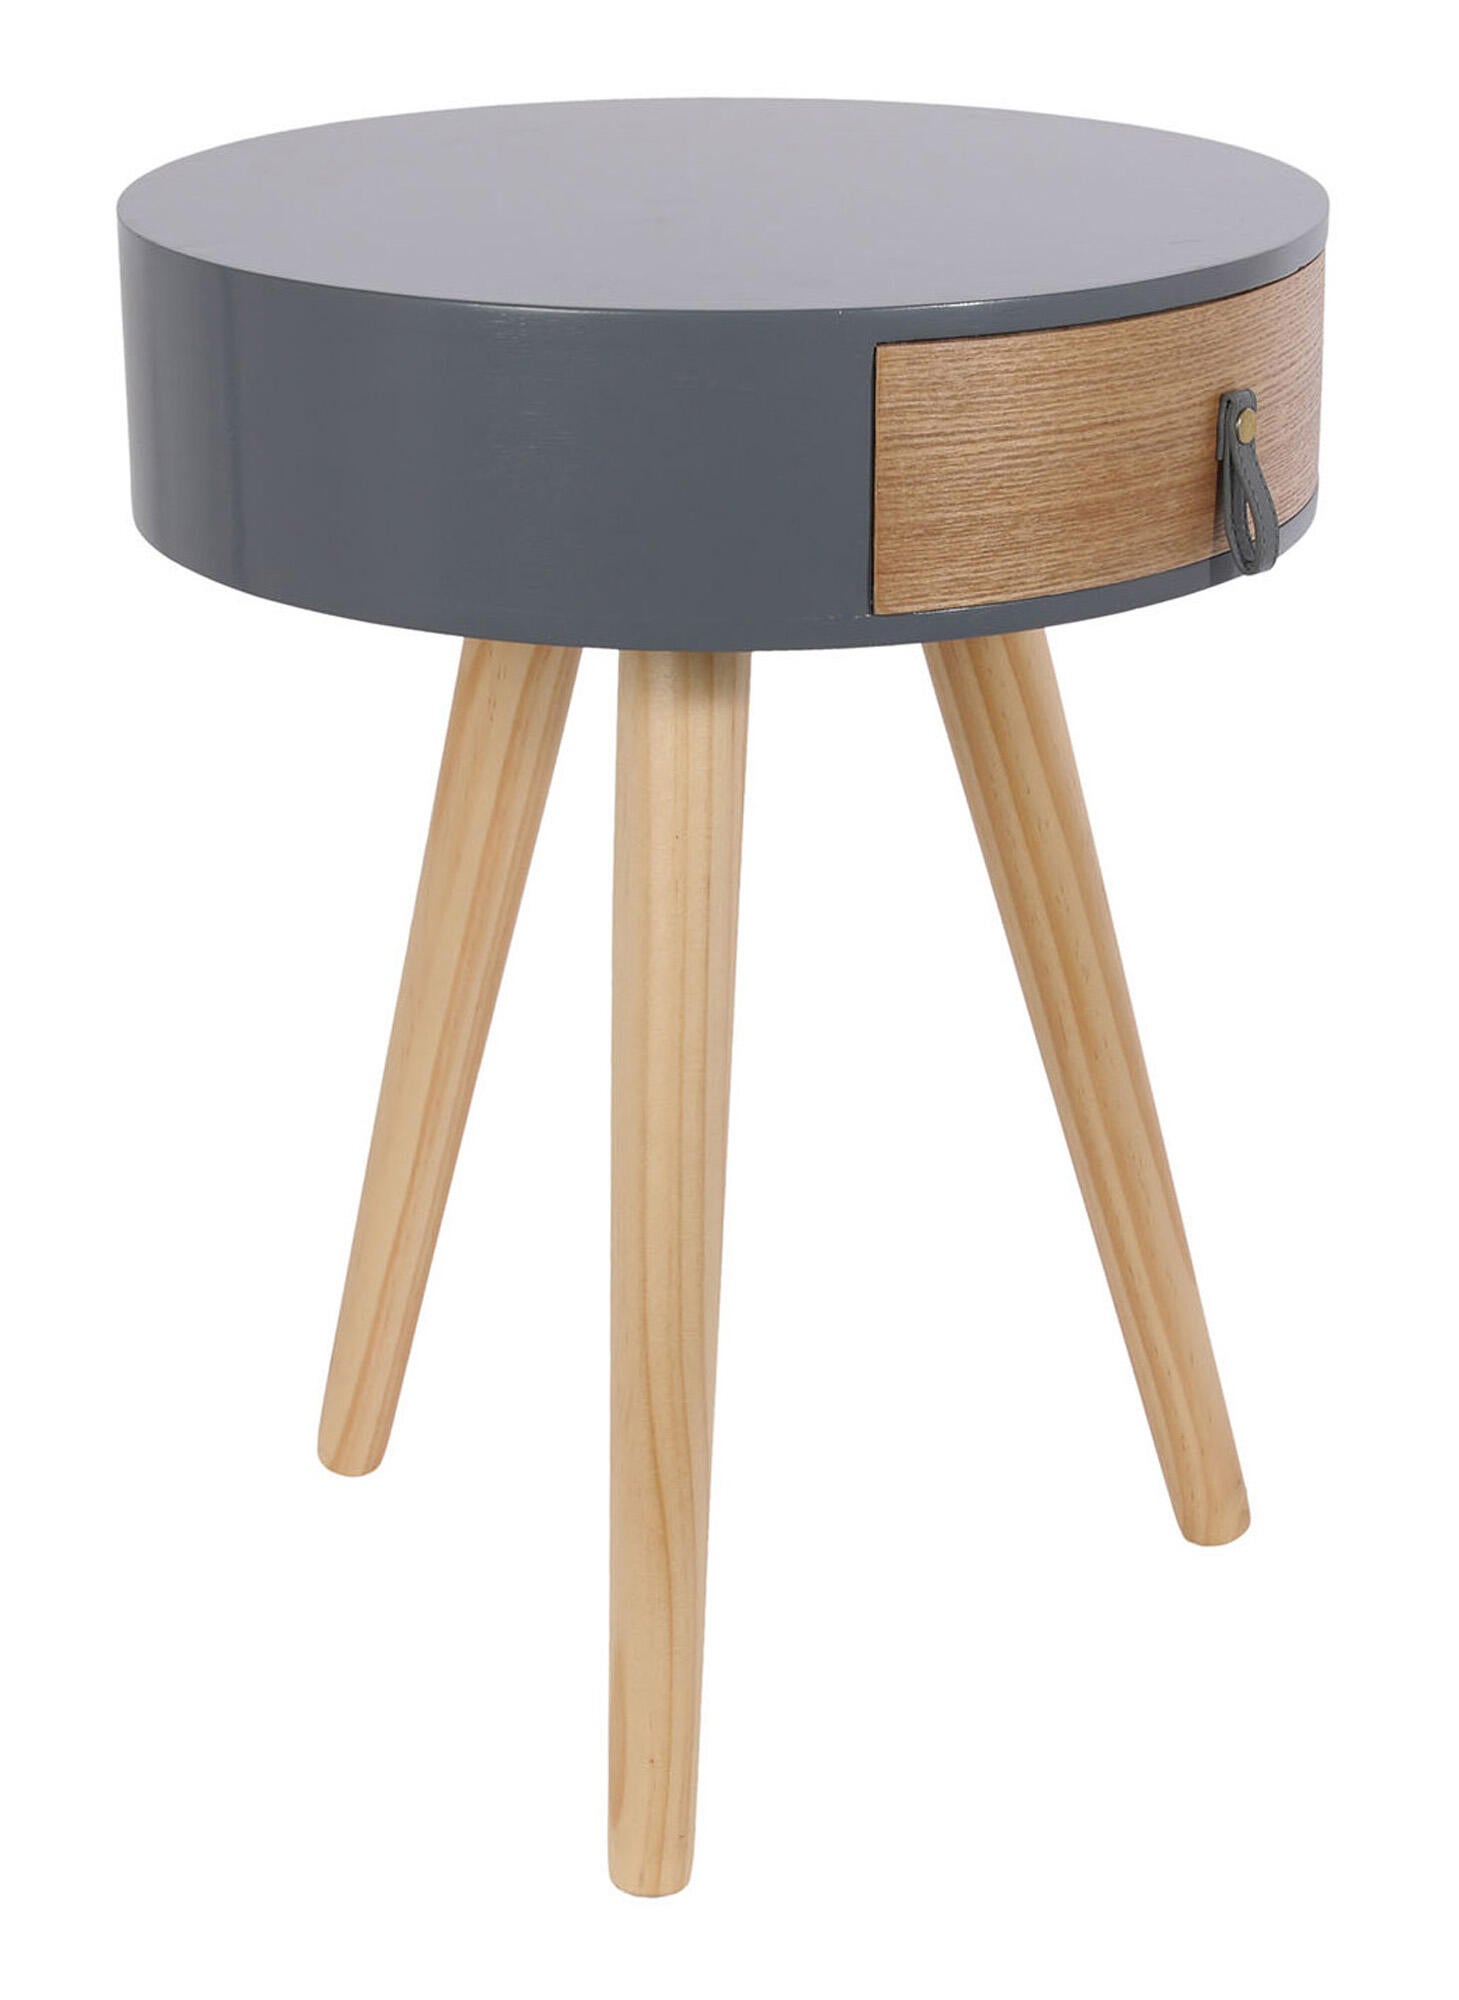 Mesita de noche redonda de madera color gris con un cajón de 46,5x35x35cm